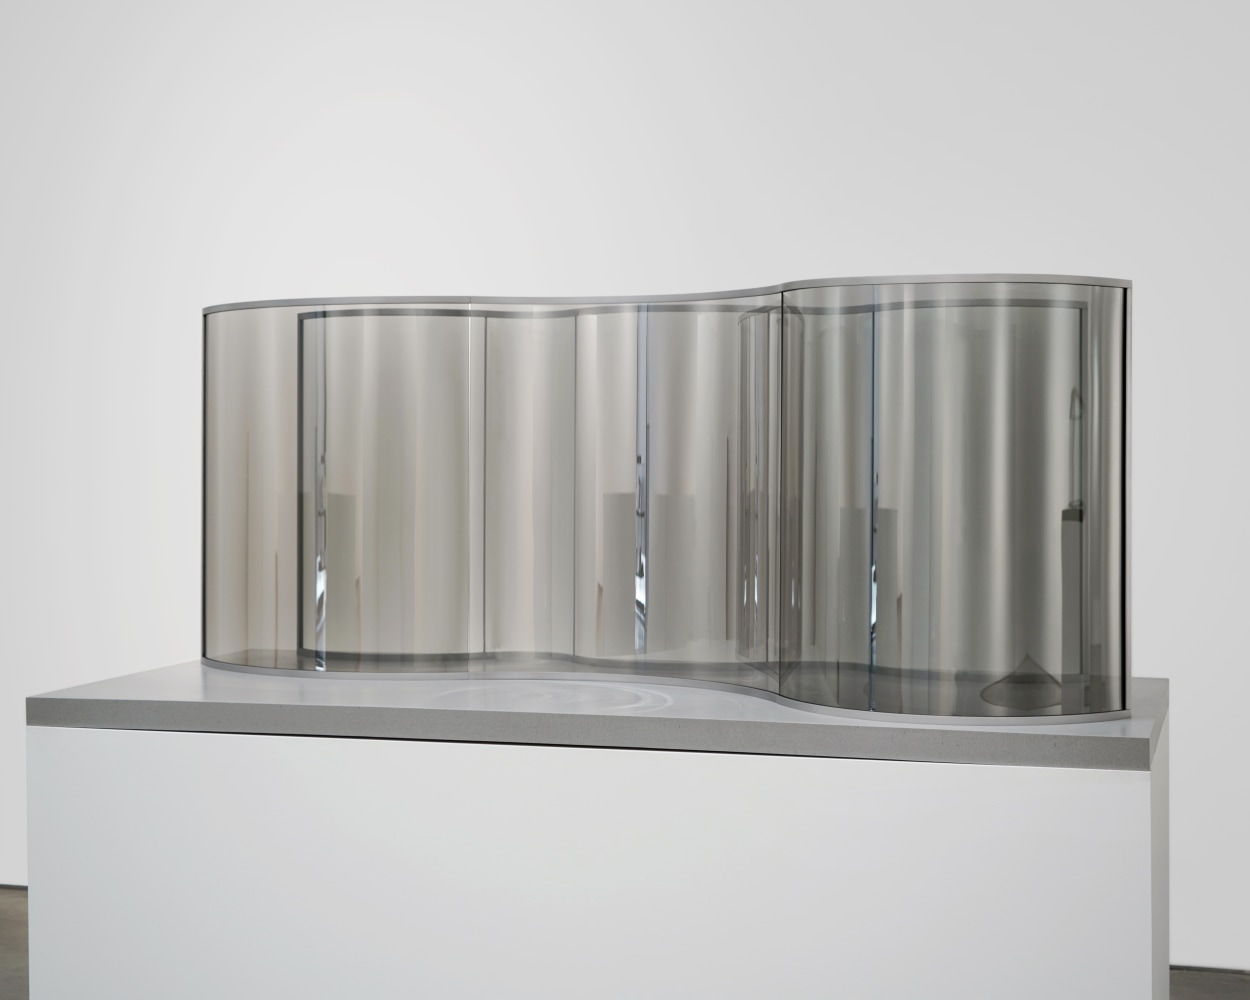 Dan Graham

Neo-Baroque Walkway

2020

2-way mirror glass, aluminum

34 1/4 x 86 1/2 x 39 3/8 inches (87 x 219.7 x 100 cm)

Edition of 3

DG 107

&amp;nbsp;

INQUIRE